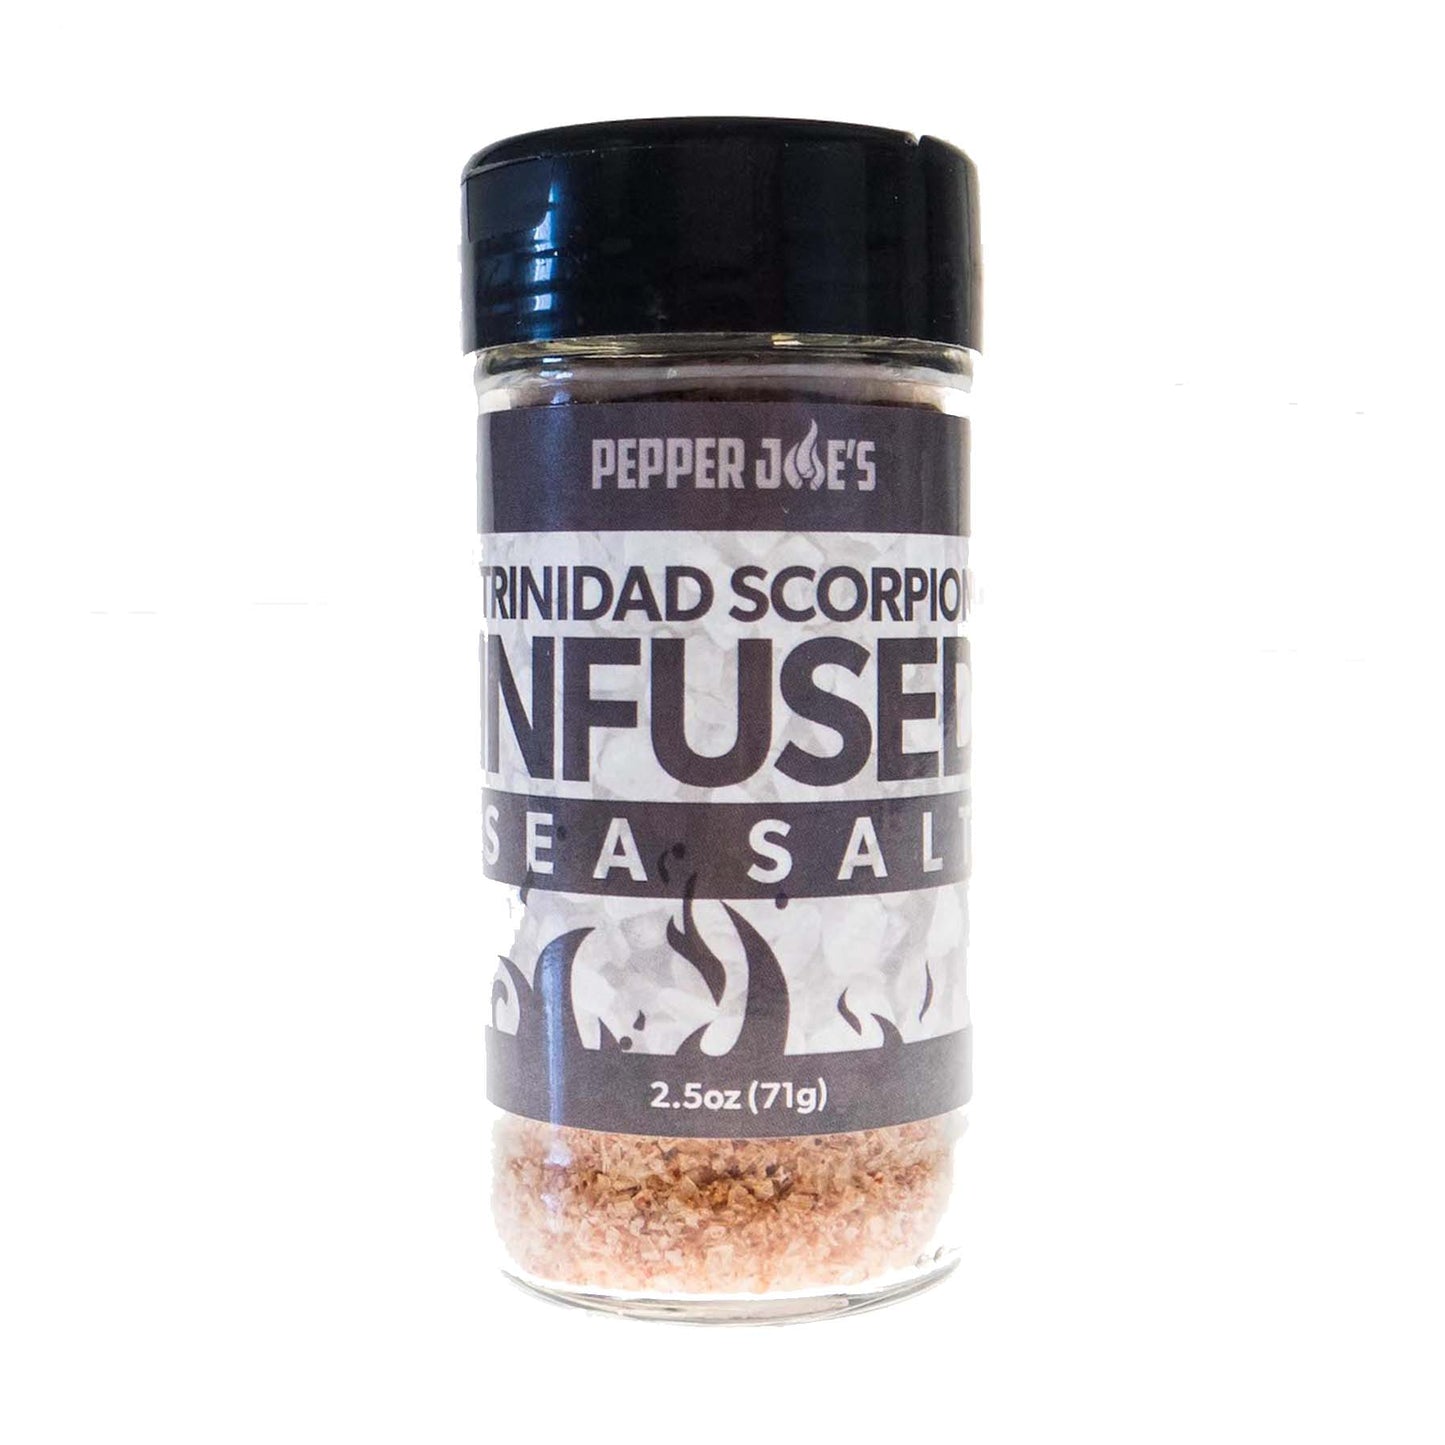 Pepper Joe's Spicy Sea Salt Collection - gourmet salt collection - trinidad scorpion sea salt on white background